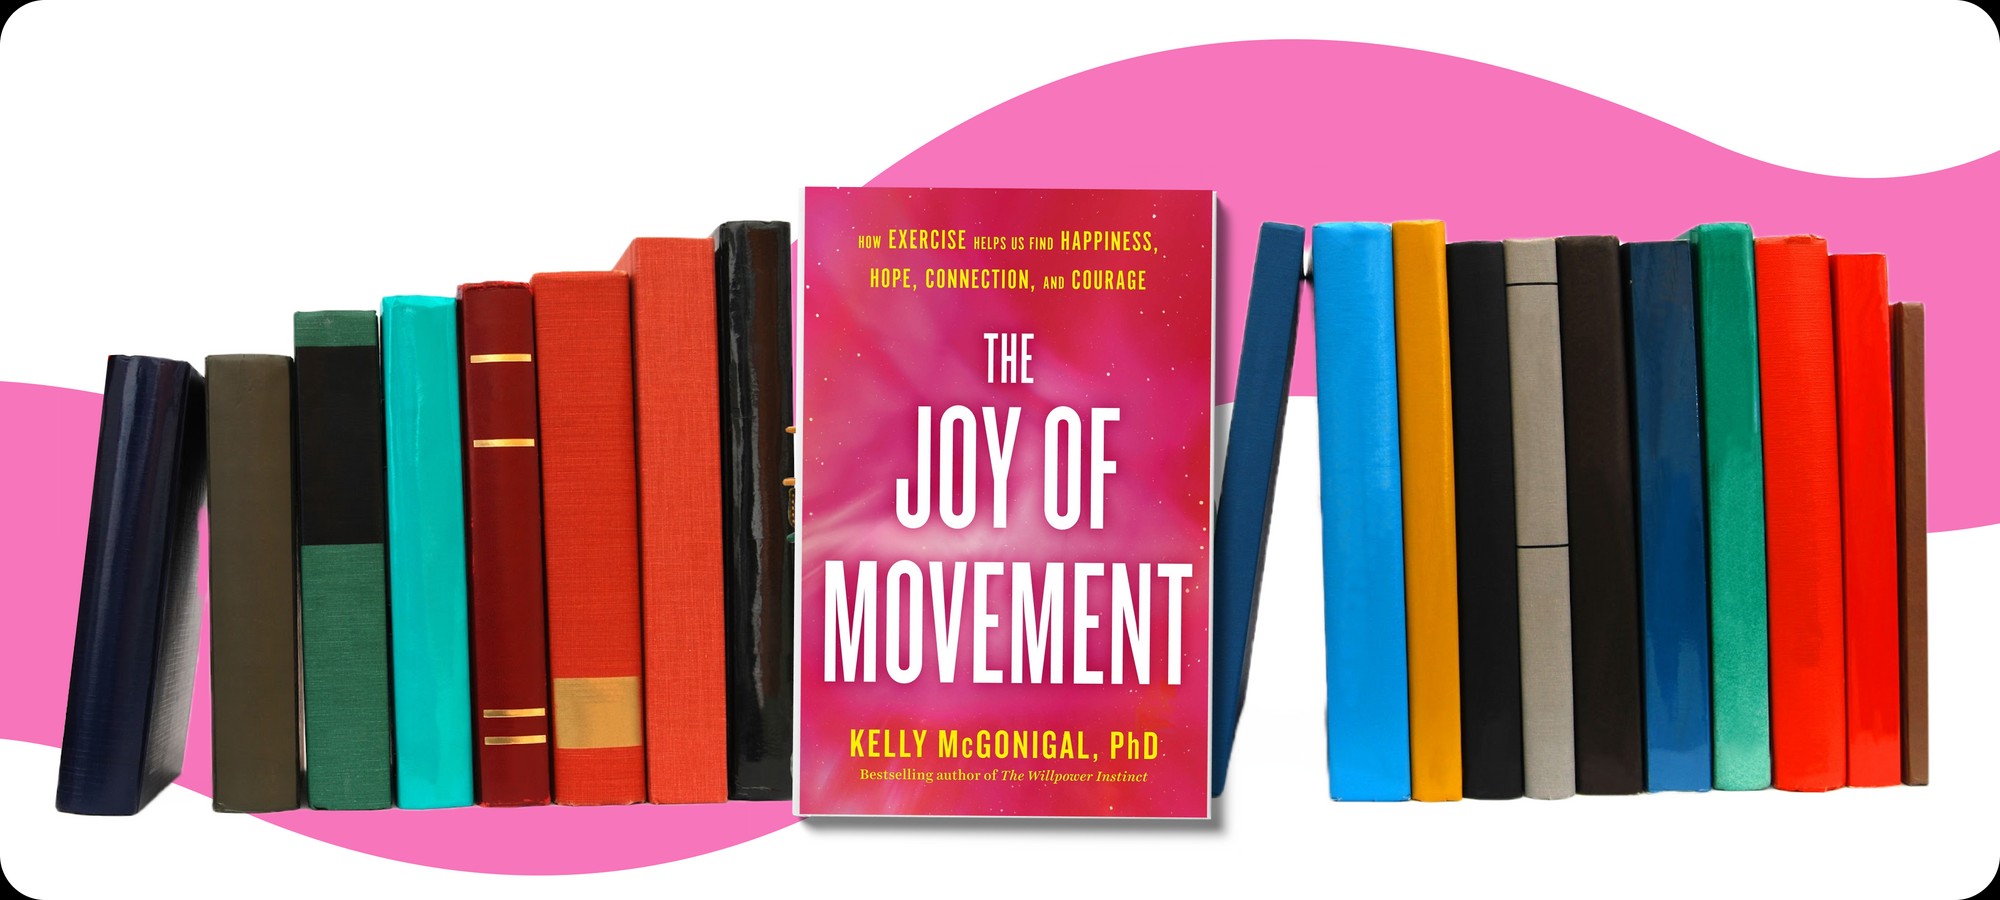 The joy of movement